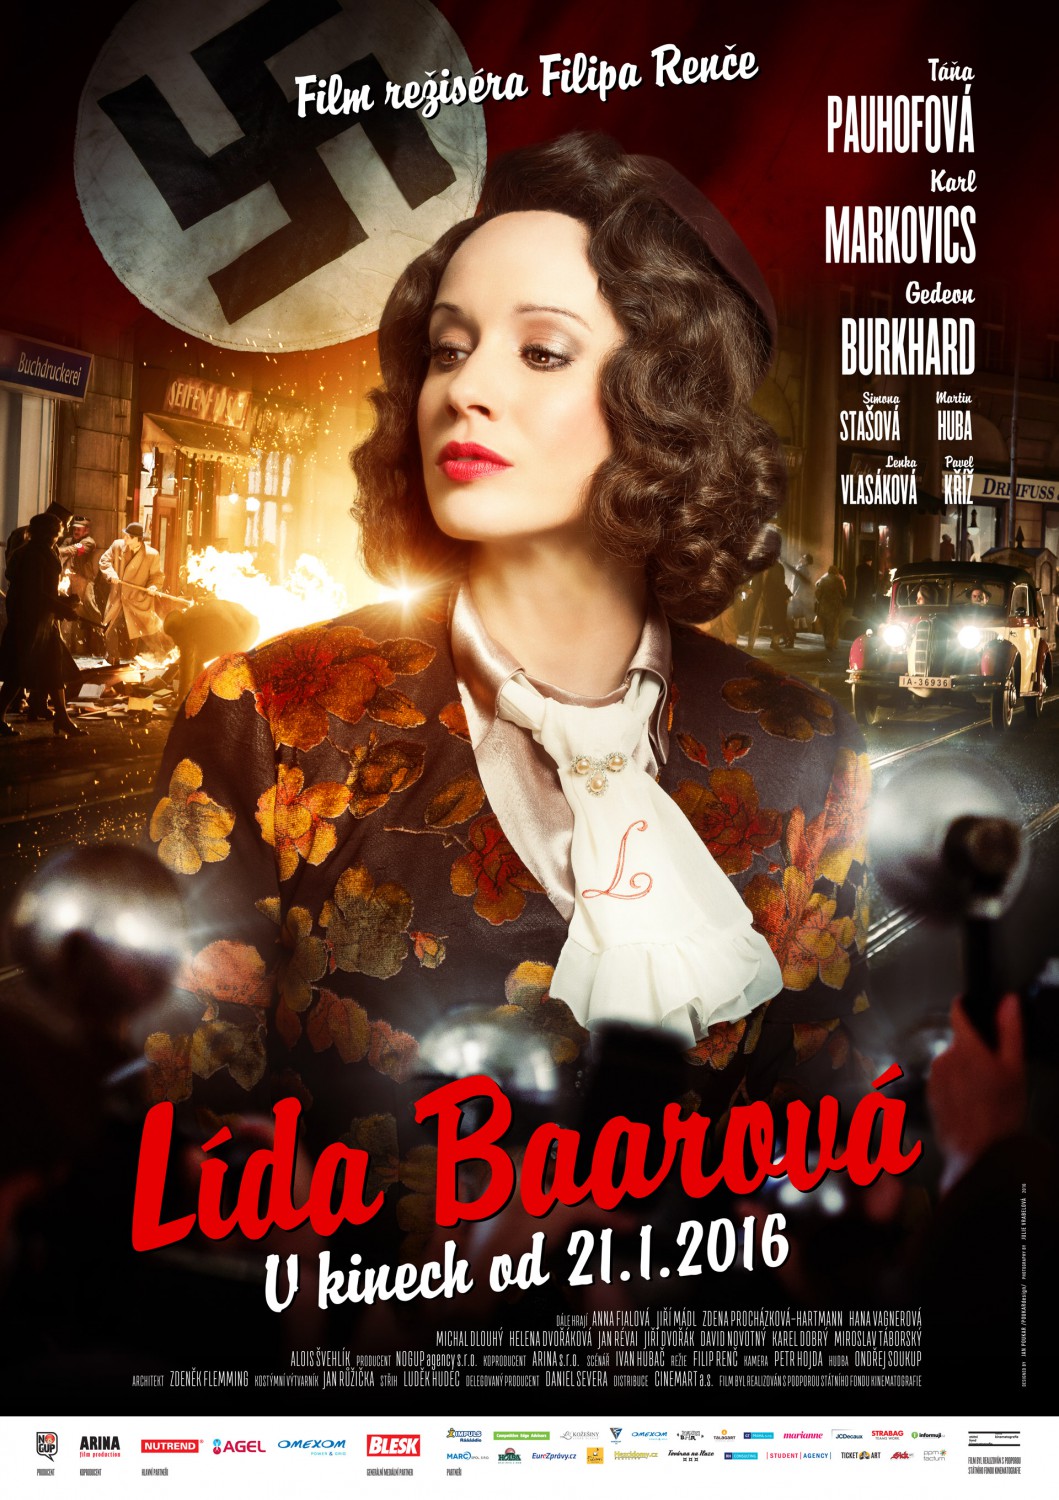 Extra Large Movie Poster Image for Lída Baarová 